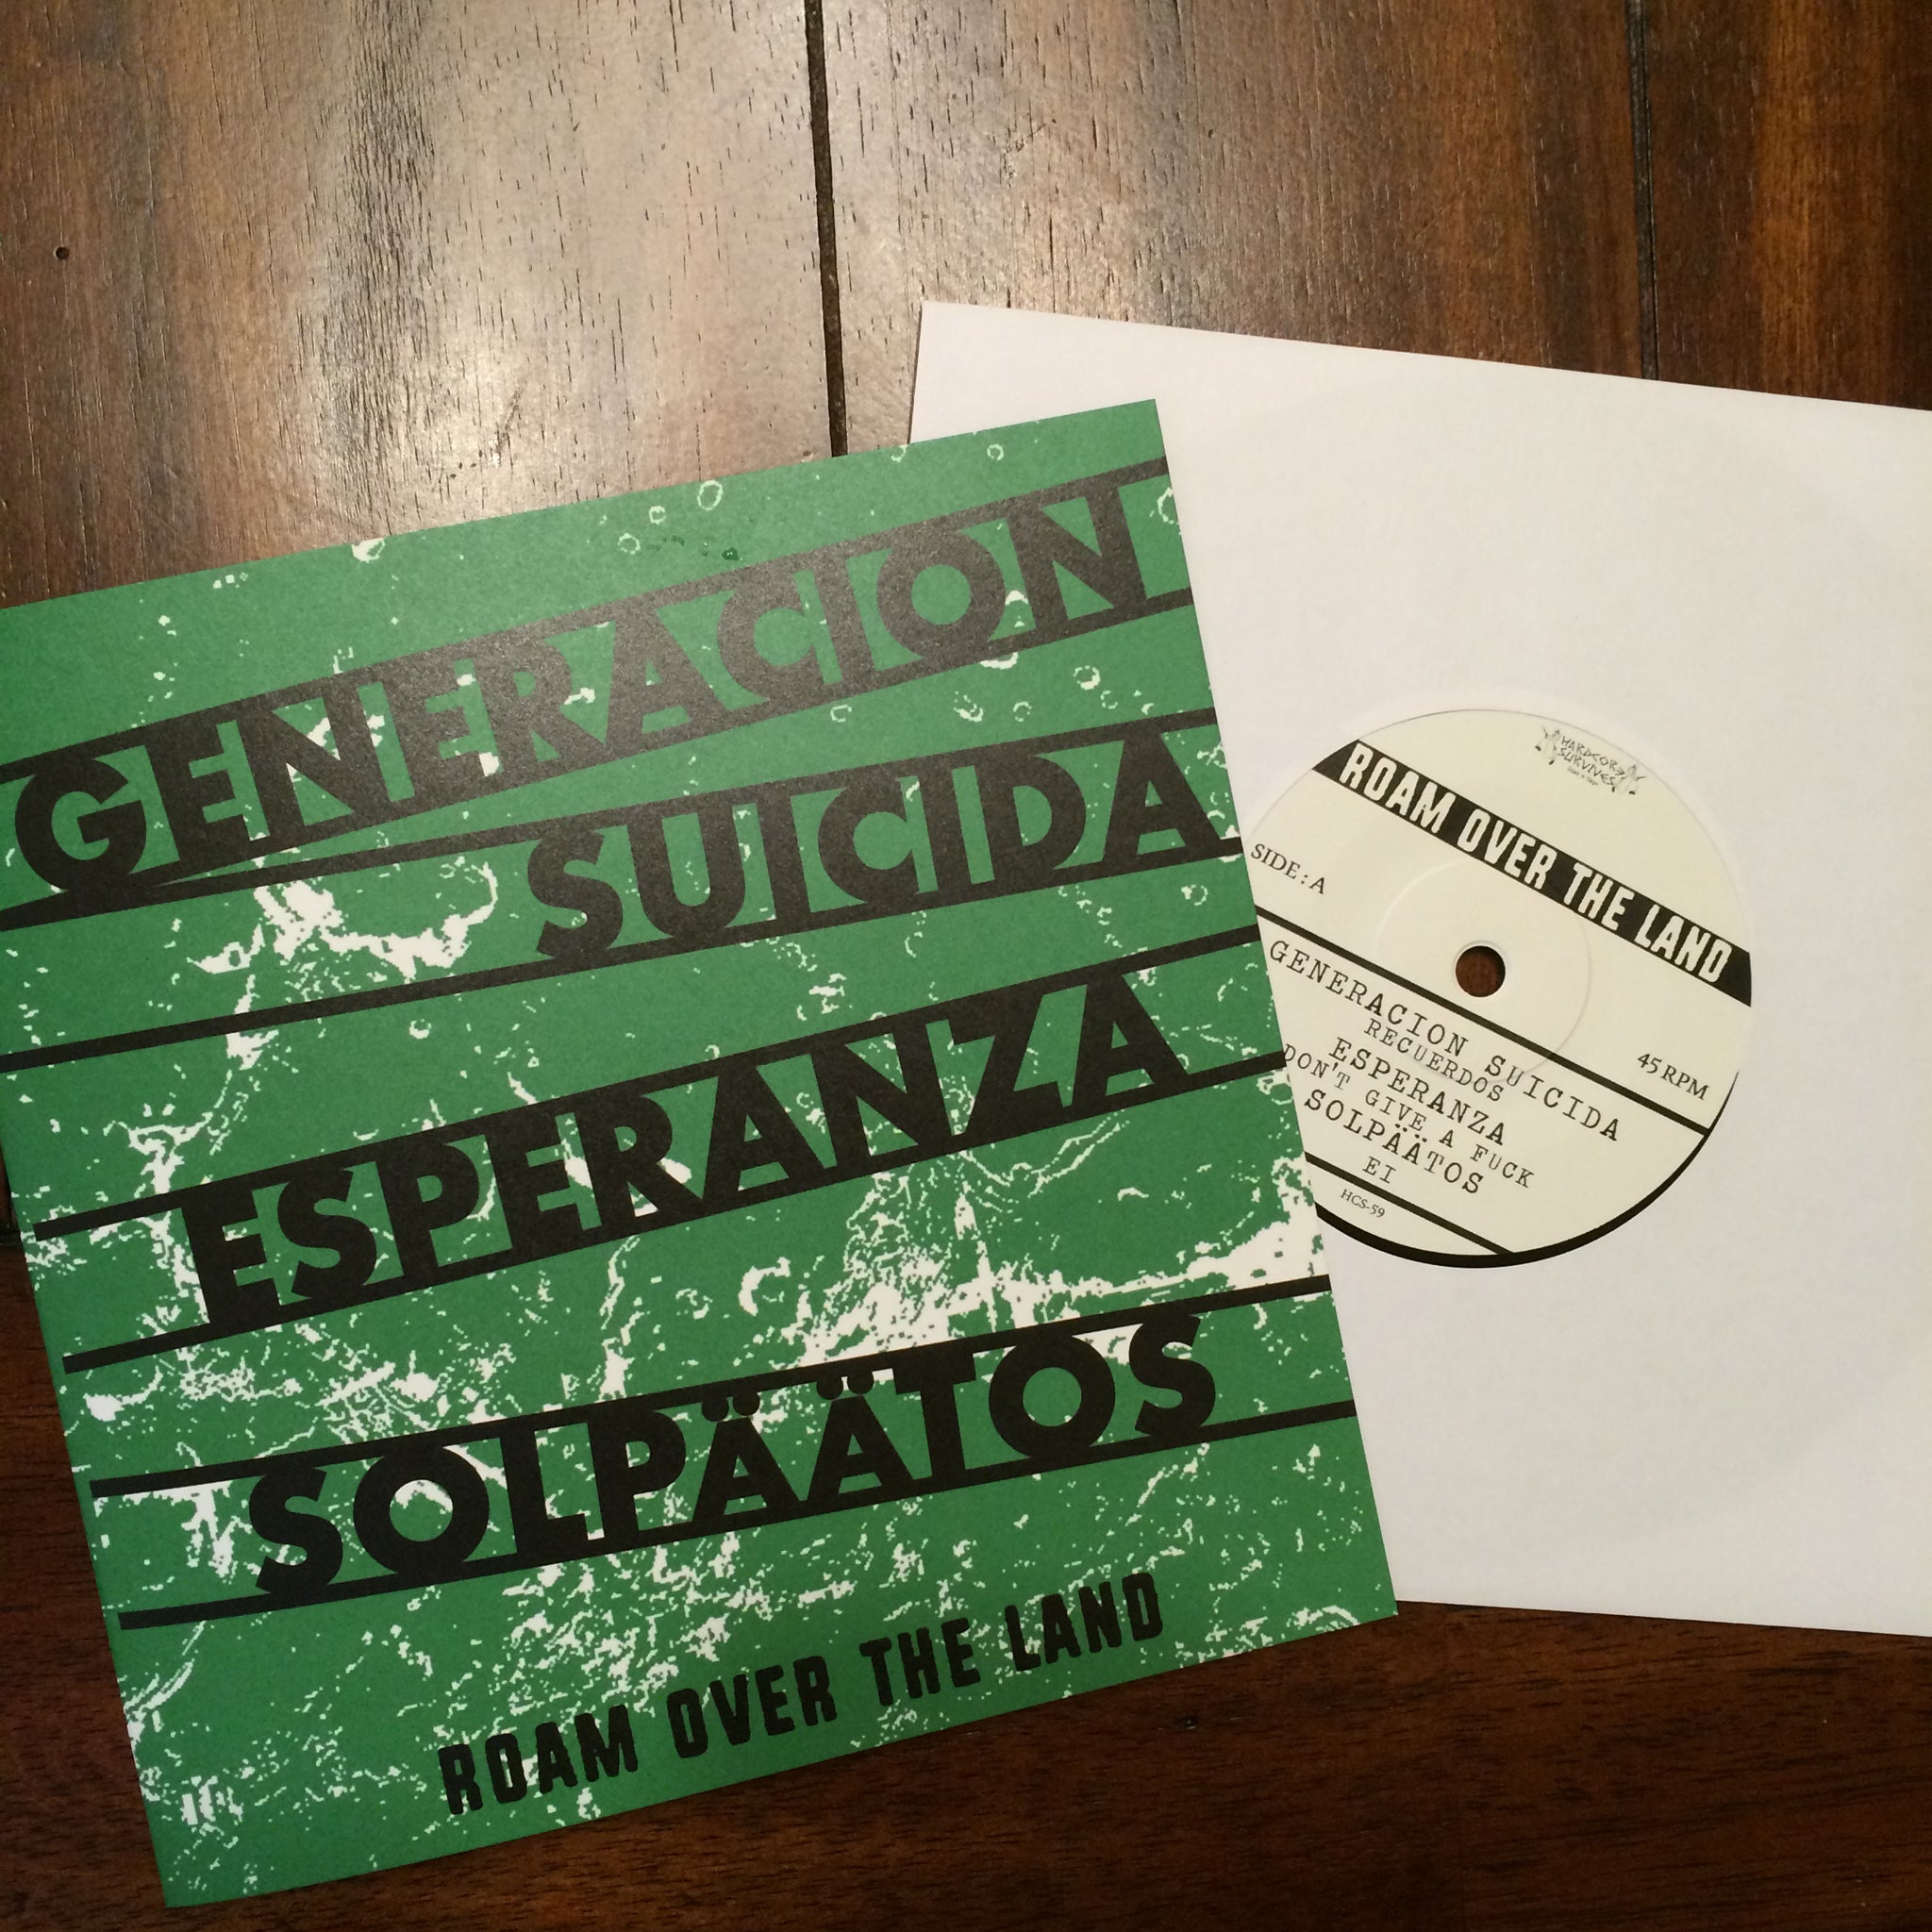 GENERACION SUICIDA / ESPERANZA / SOLPAATOS - JAPAN TOUR 7" EP